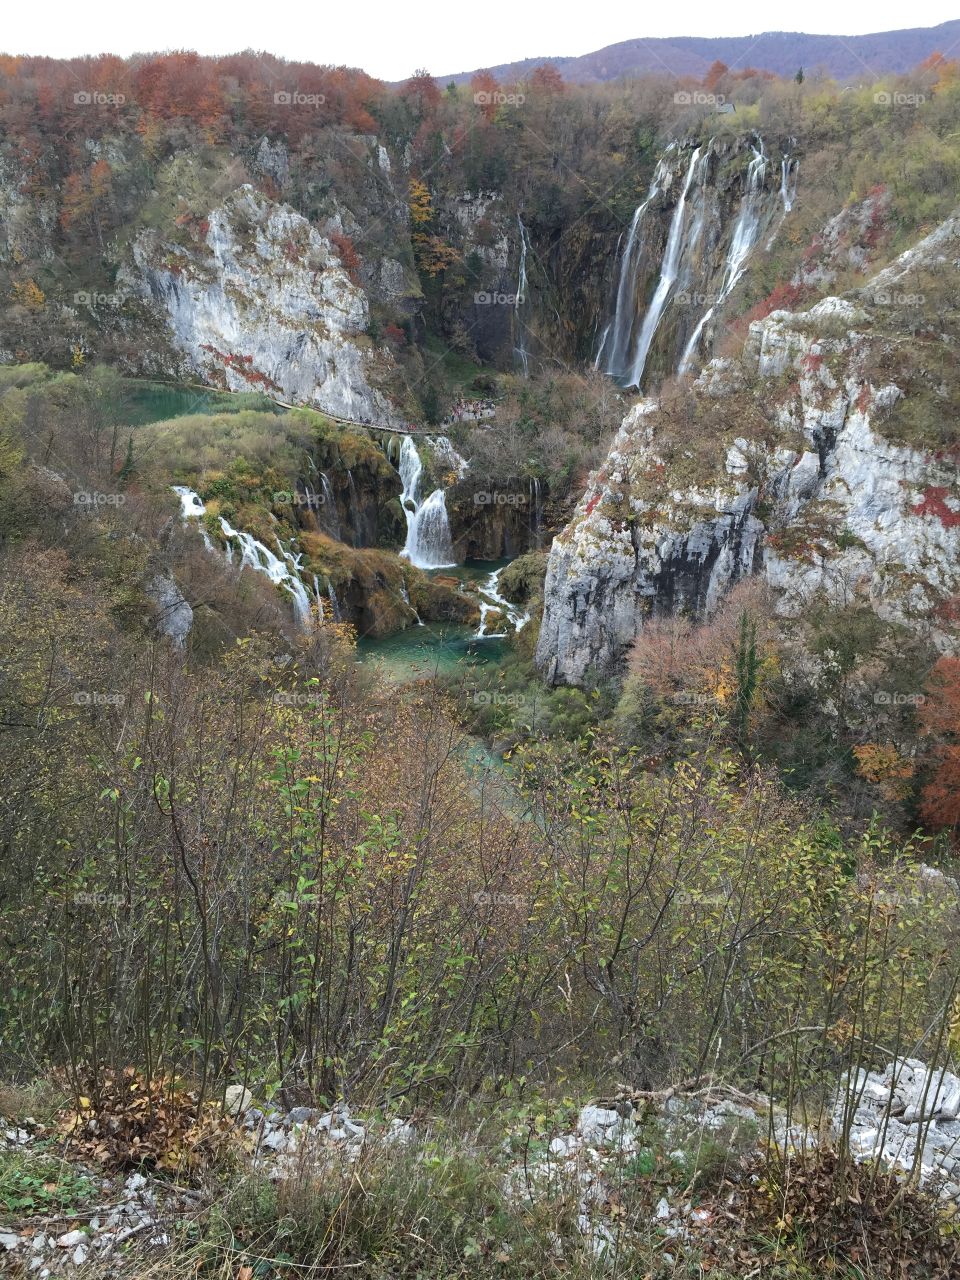 Beauty of Plitvice lakes